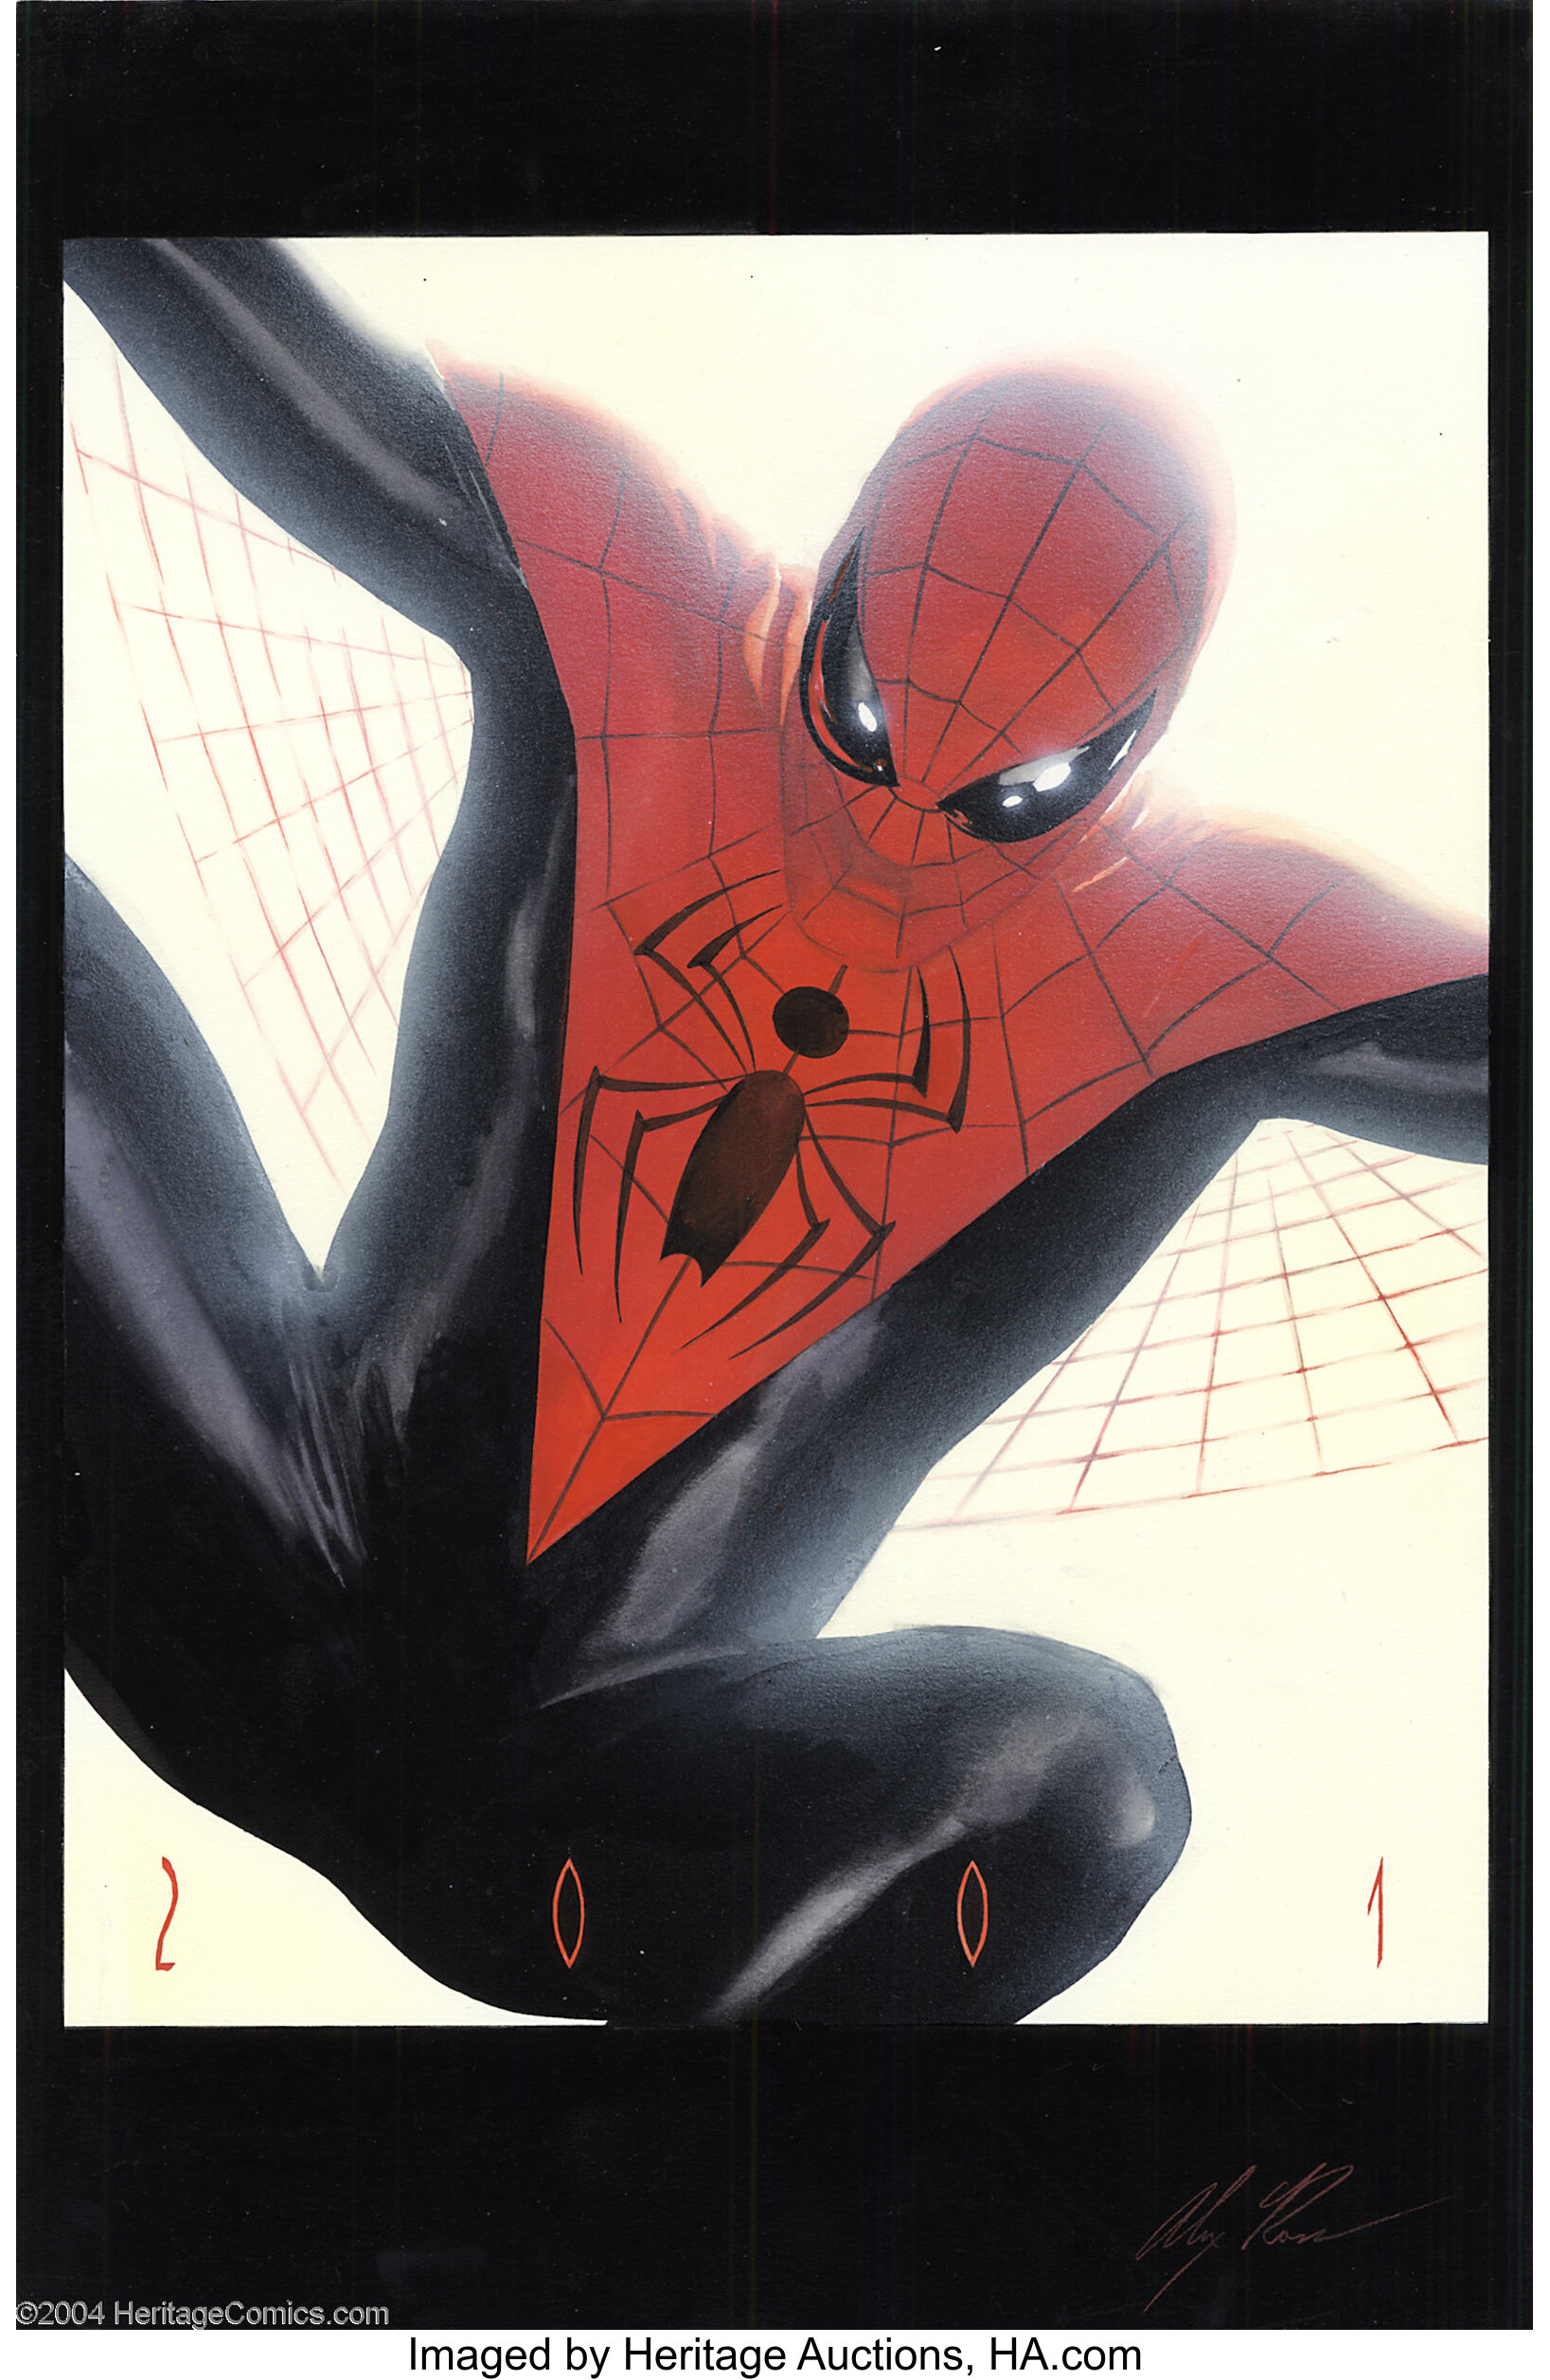 Alex Ross - Spider-Man Concept Painting Original Art (2001). | Lot #8379 |  Heritage Auctions